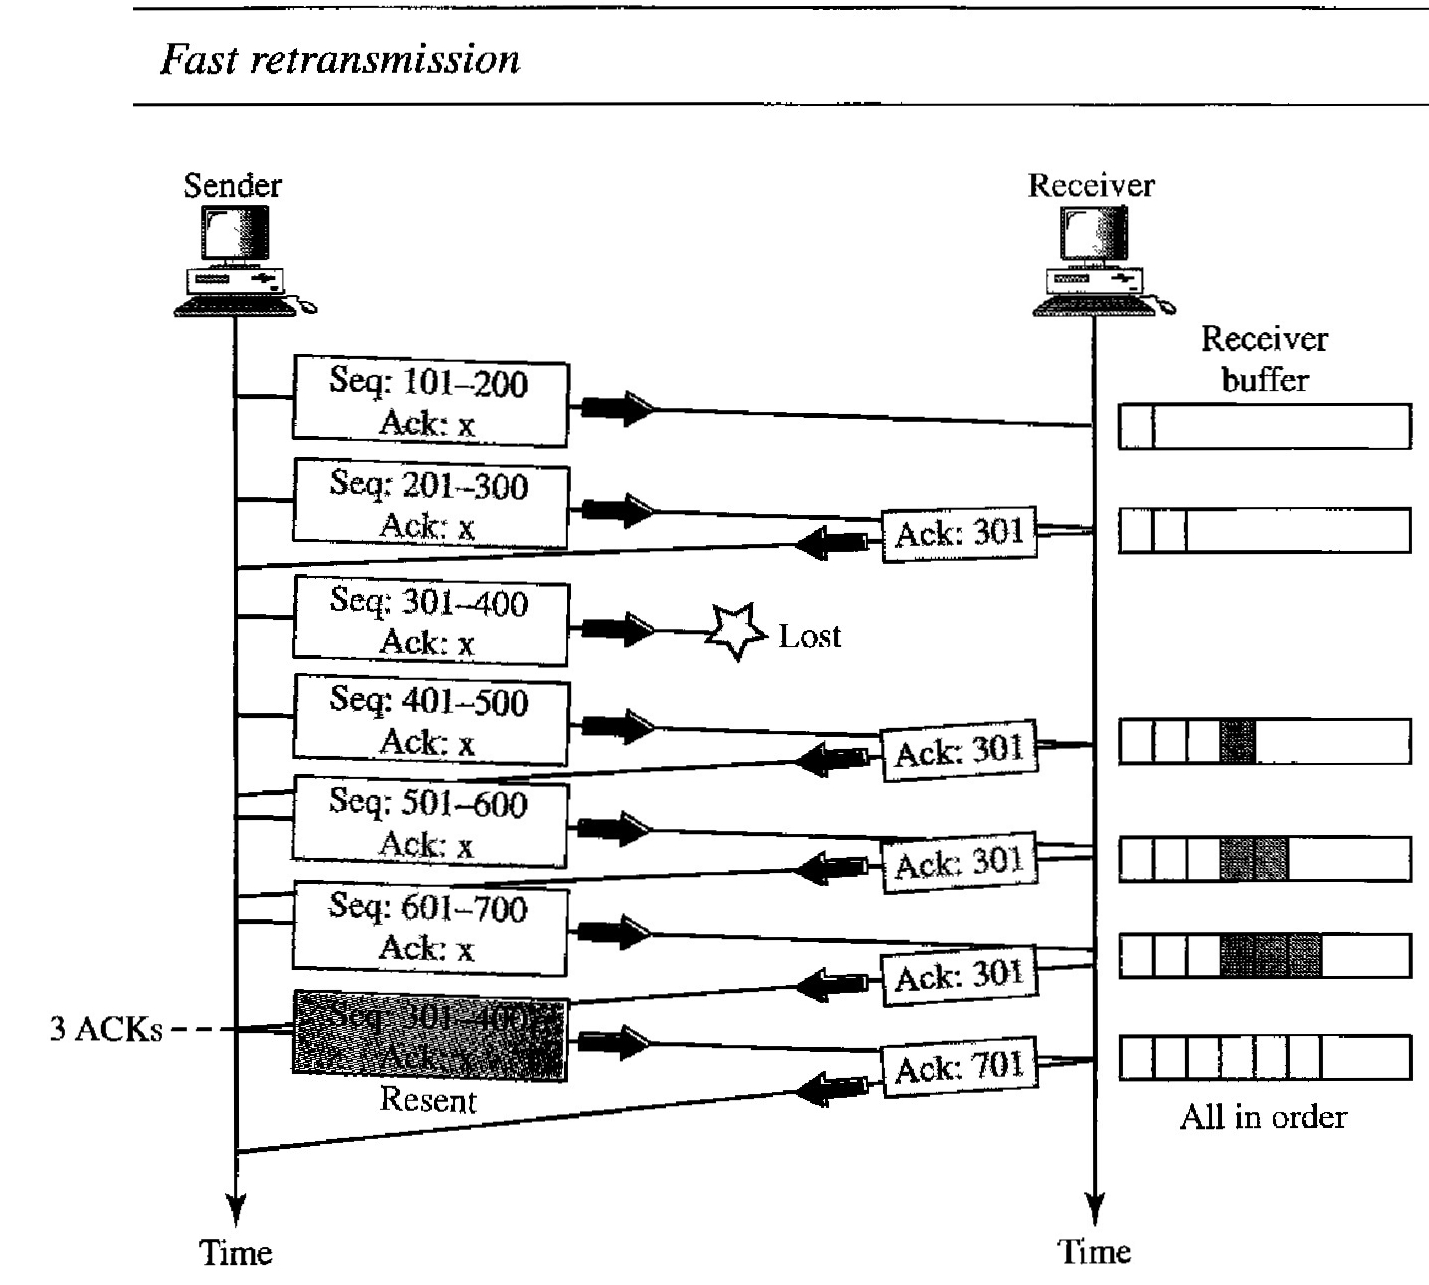 Scenarios during TCP transmission - Fast Retransmission